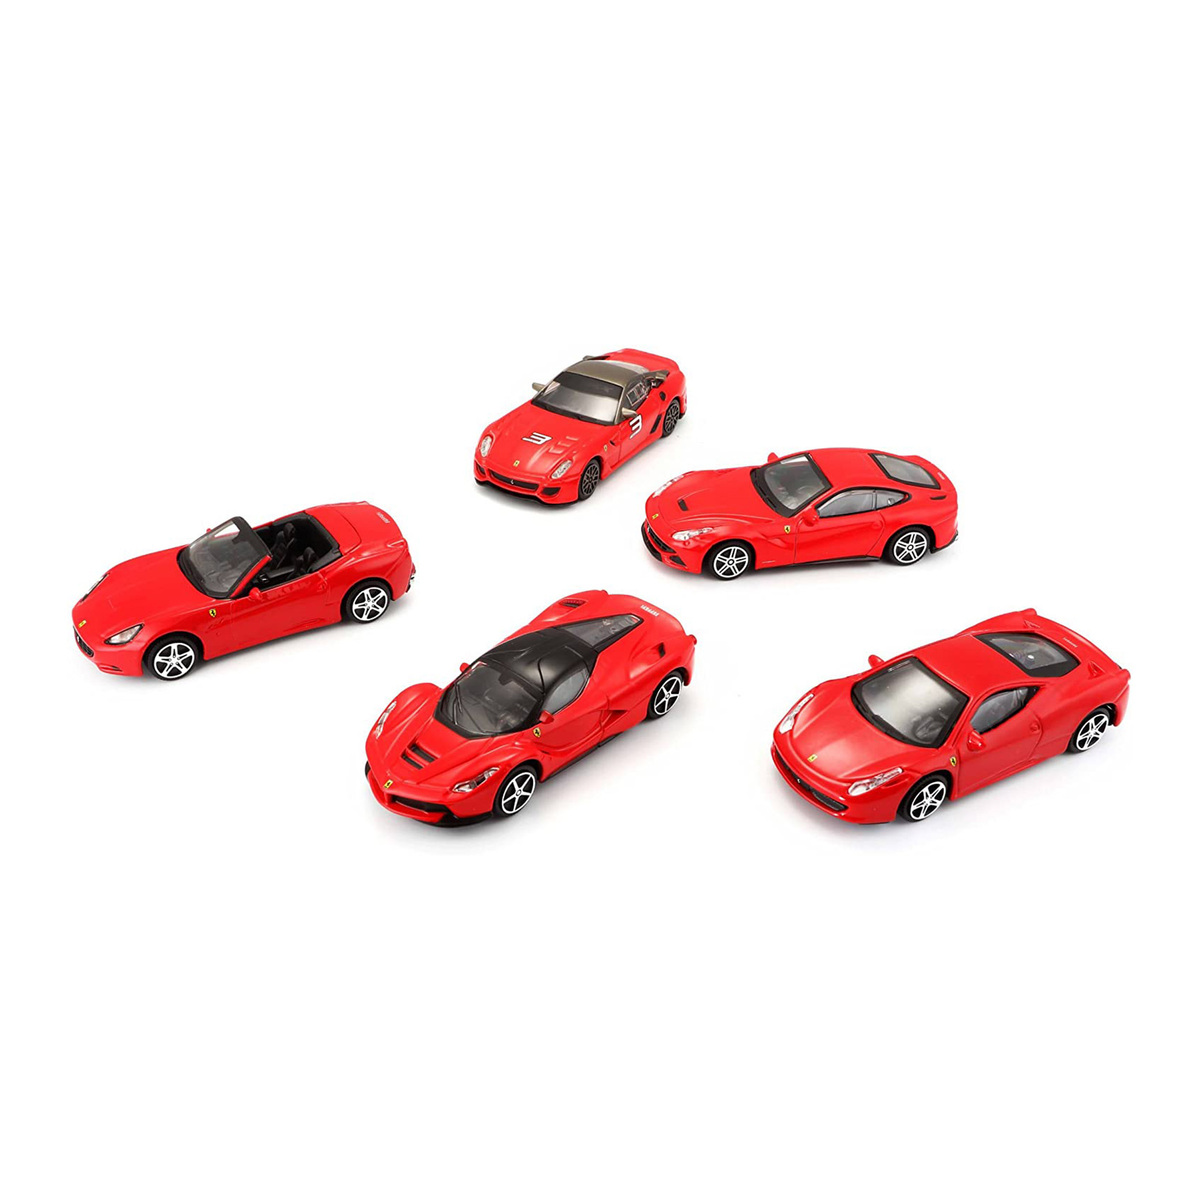 Bburago Die Cast Race And Play Ferrari Car Model NB910988 (Set of 5)